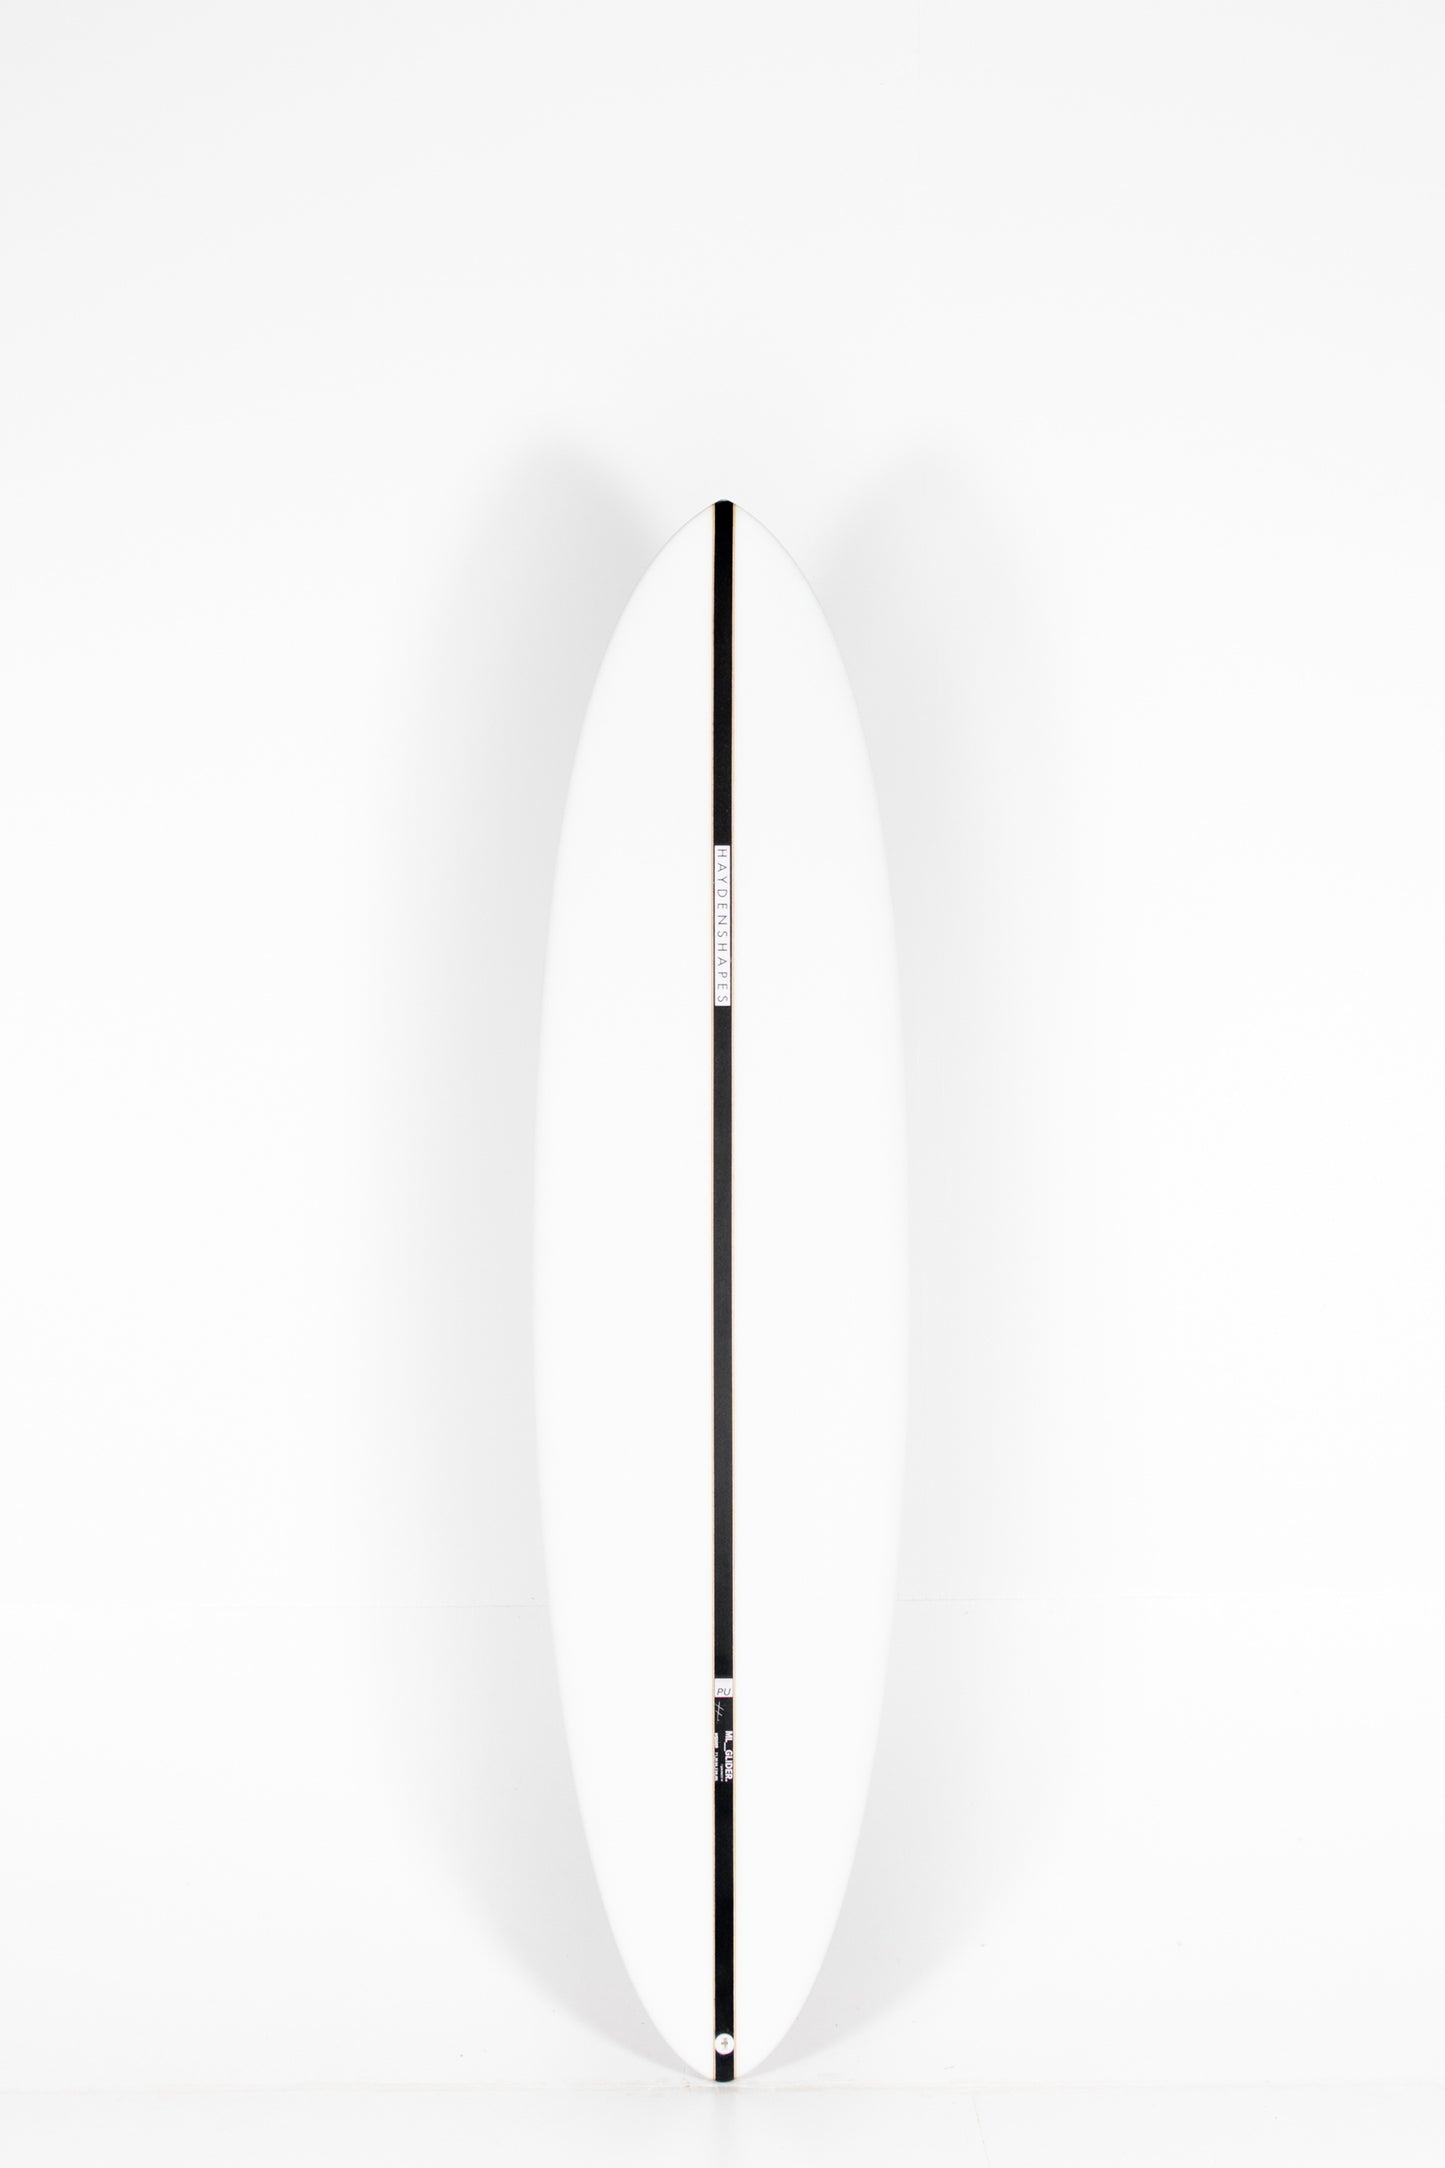 Pukas Surf Shop - HaydenShapes Surfboard - MID LENGTH GLIDER - 7'1" X 20 3/4 X 2 3/4" - 45L